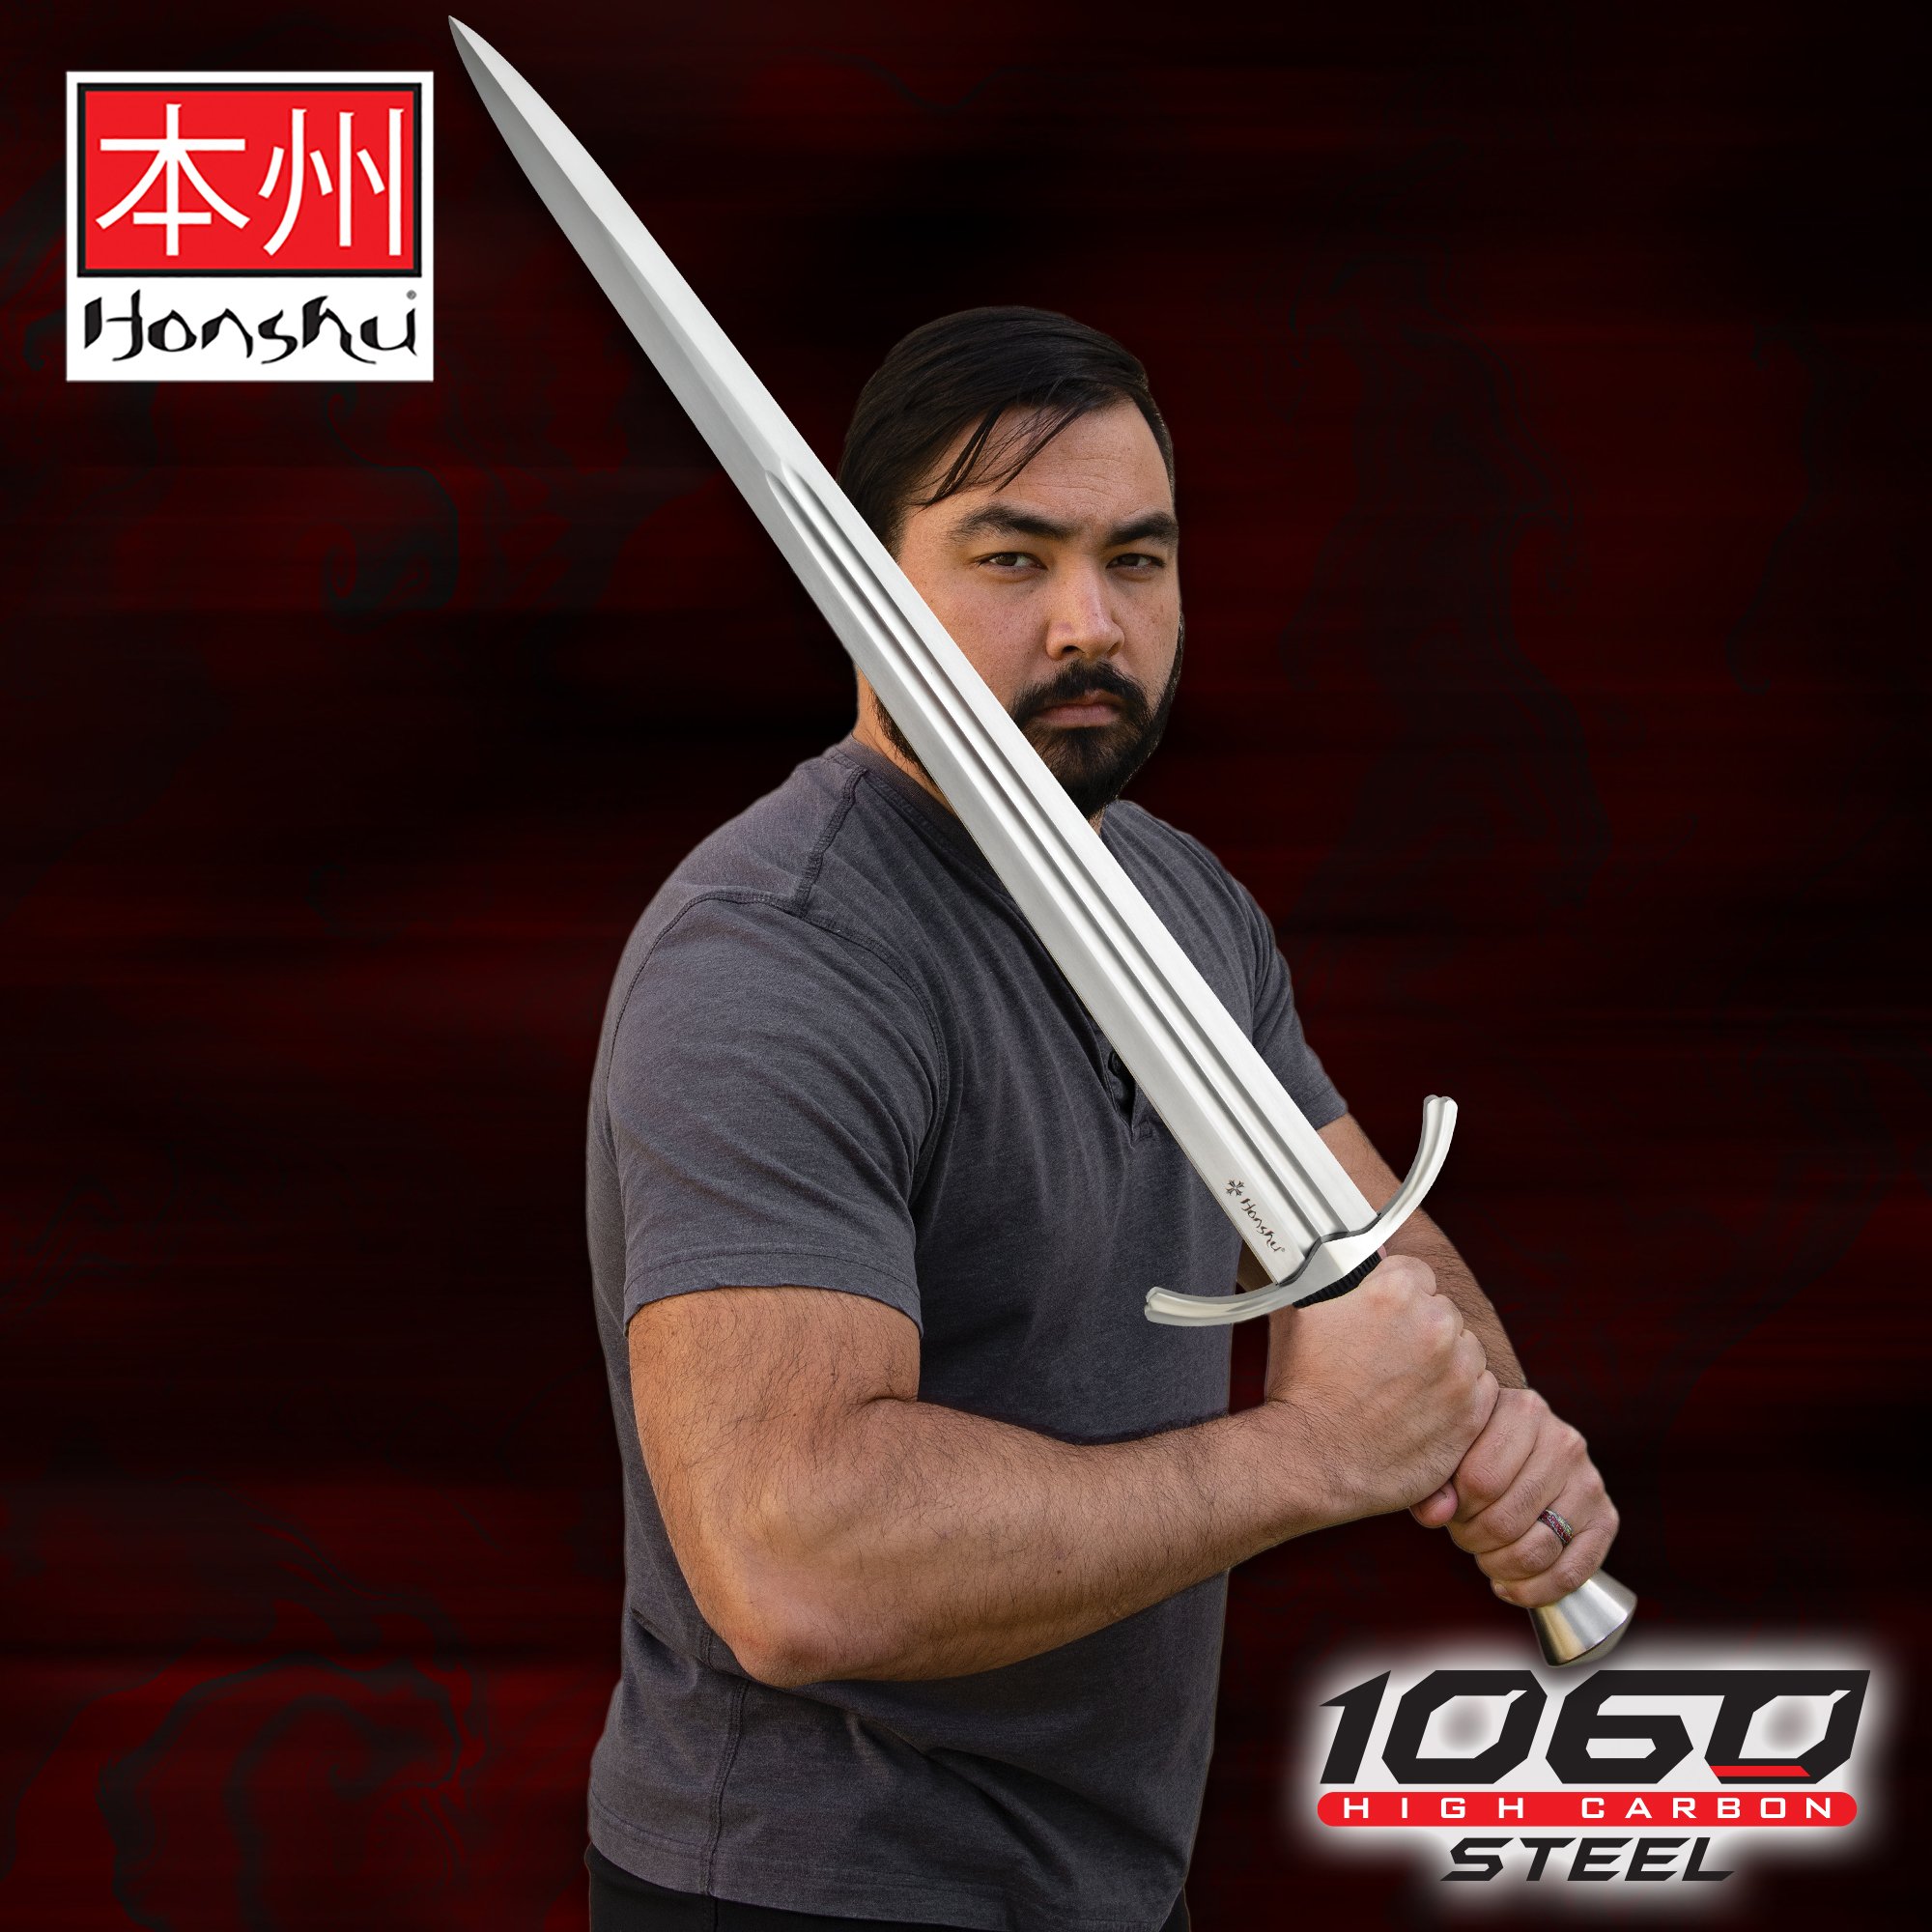 Honshu Single-Handed Broadsword And Scabbard – 1060 Carbon Steel Blade